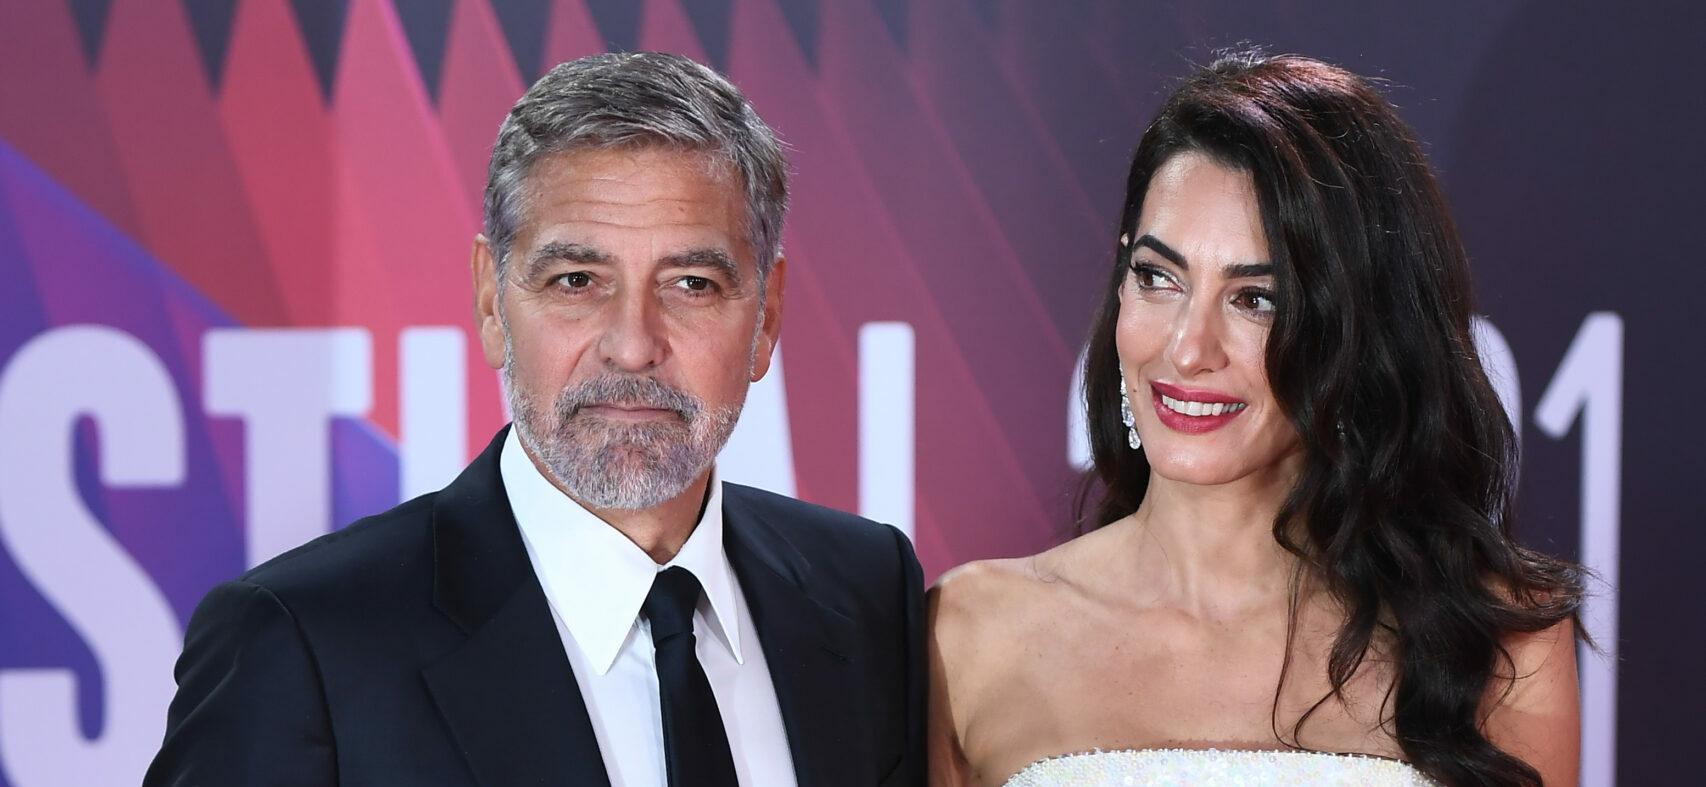 Amal CLooney & George Clooney smiling